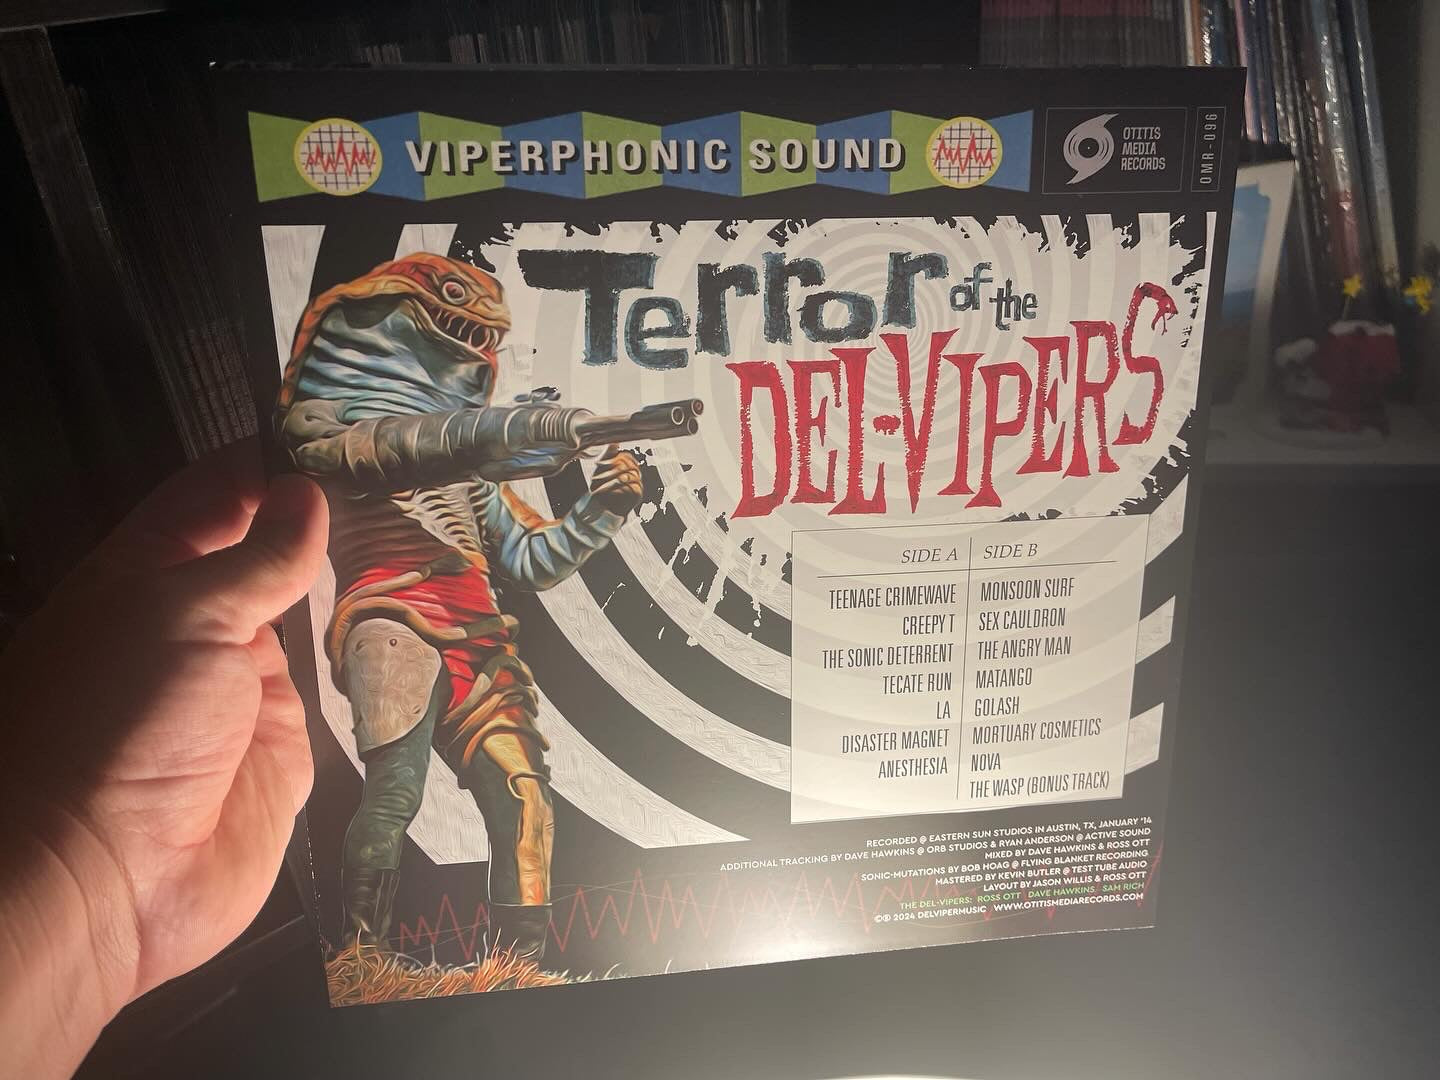 OMR-096 The Del Vipers “Terror of The Del Vipers” Vinyl (Pre-Order) Random Colored!